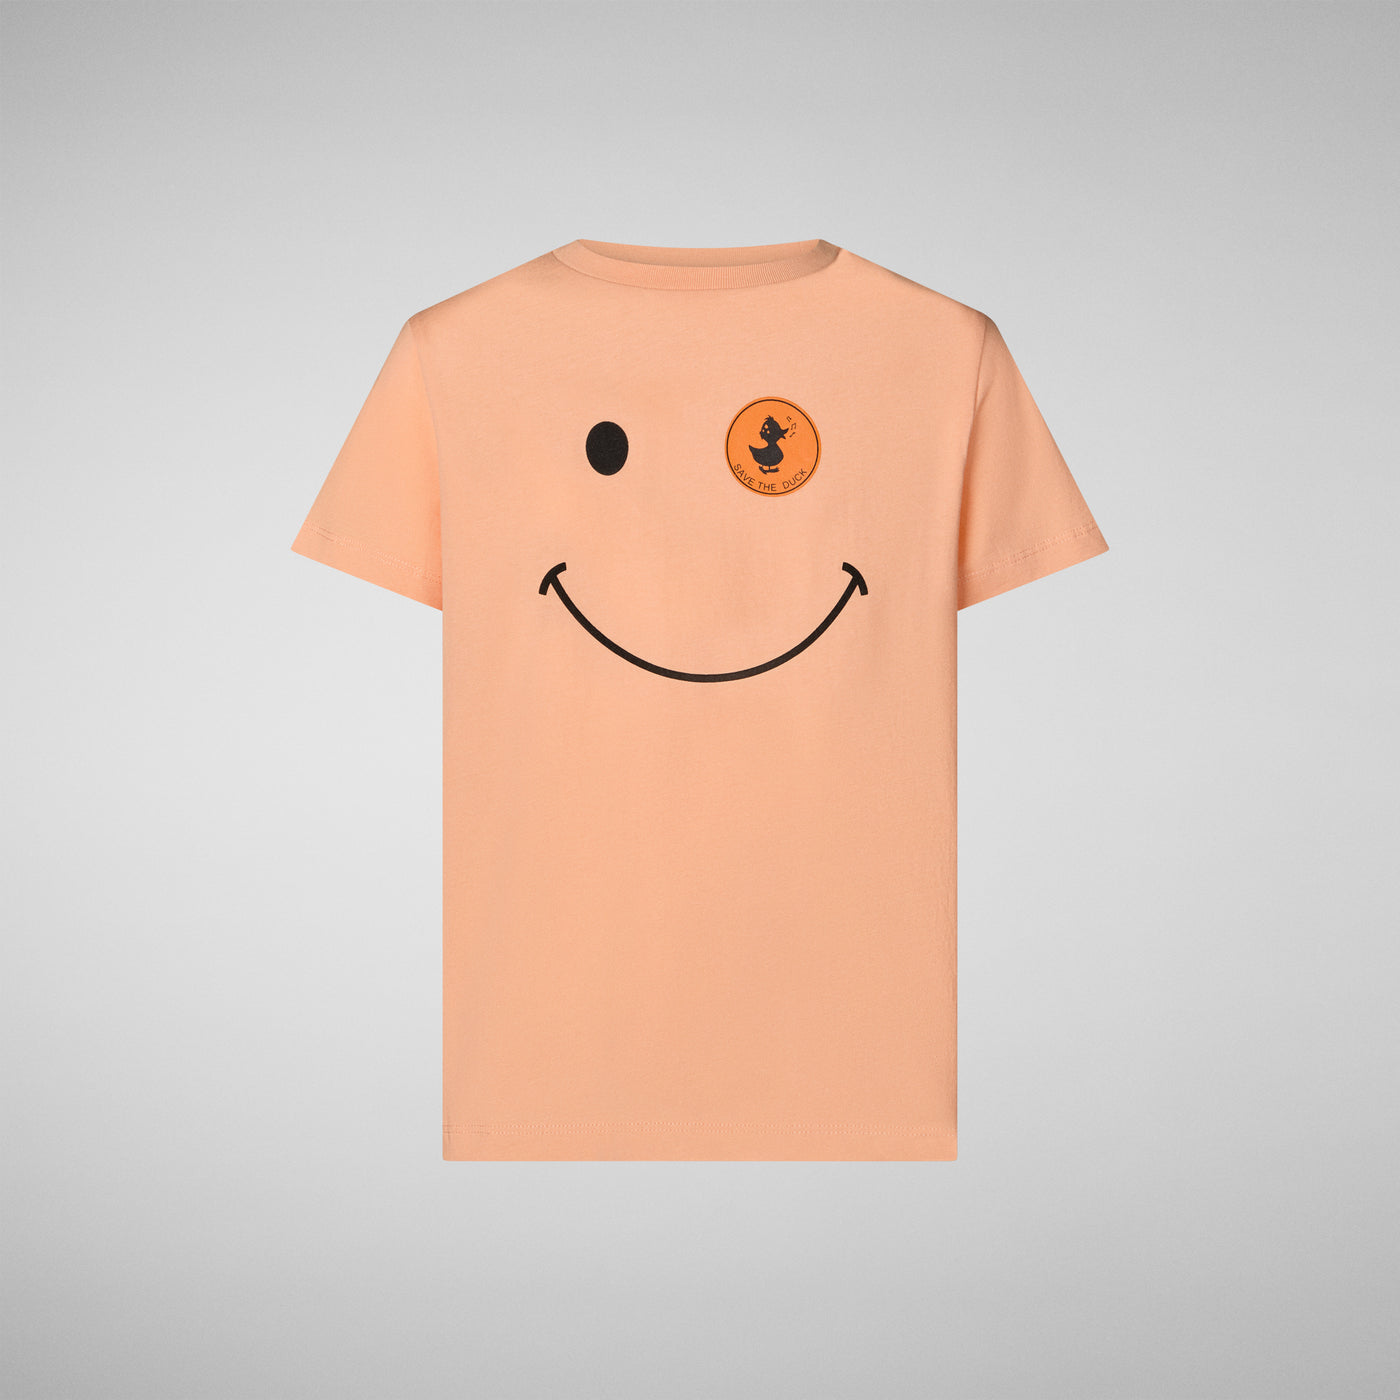 Product Front View of Unisex Kids' Asa Crewneck T-Shirt in Papaya Orange